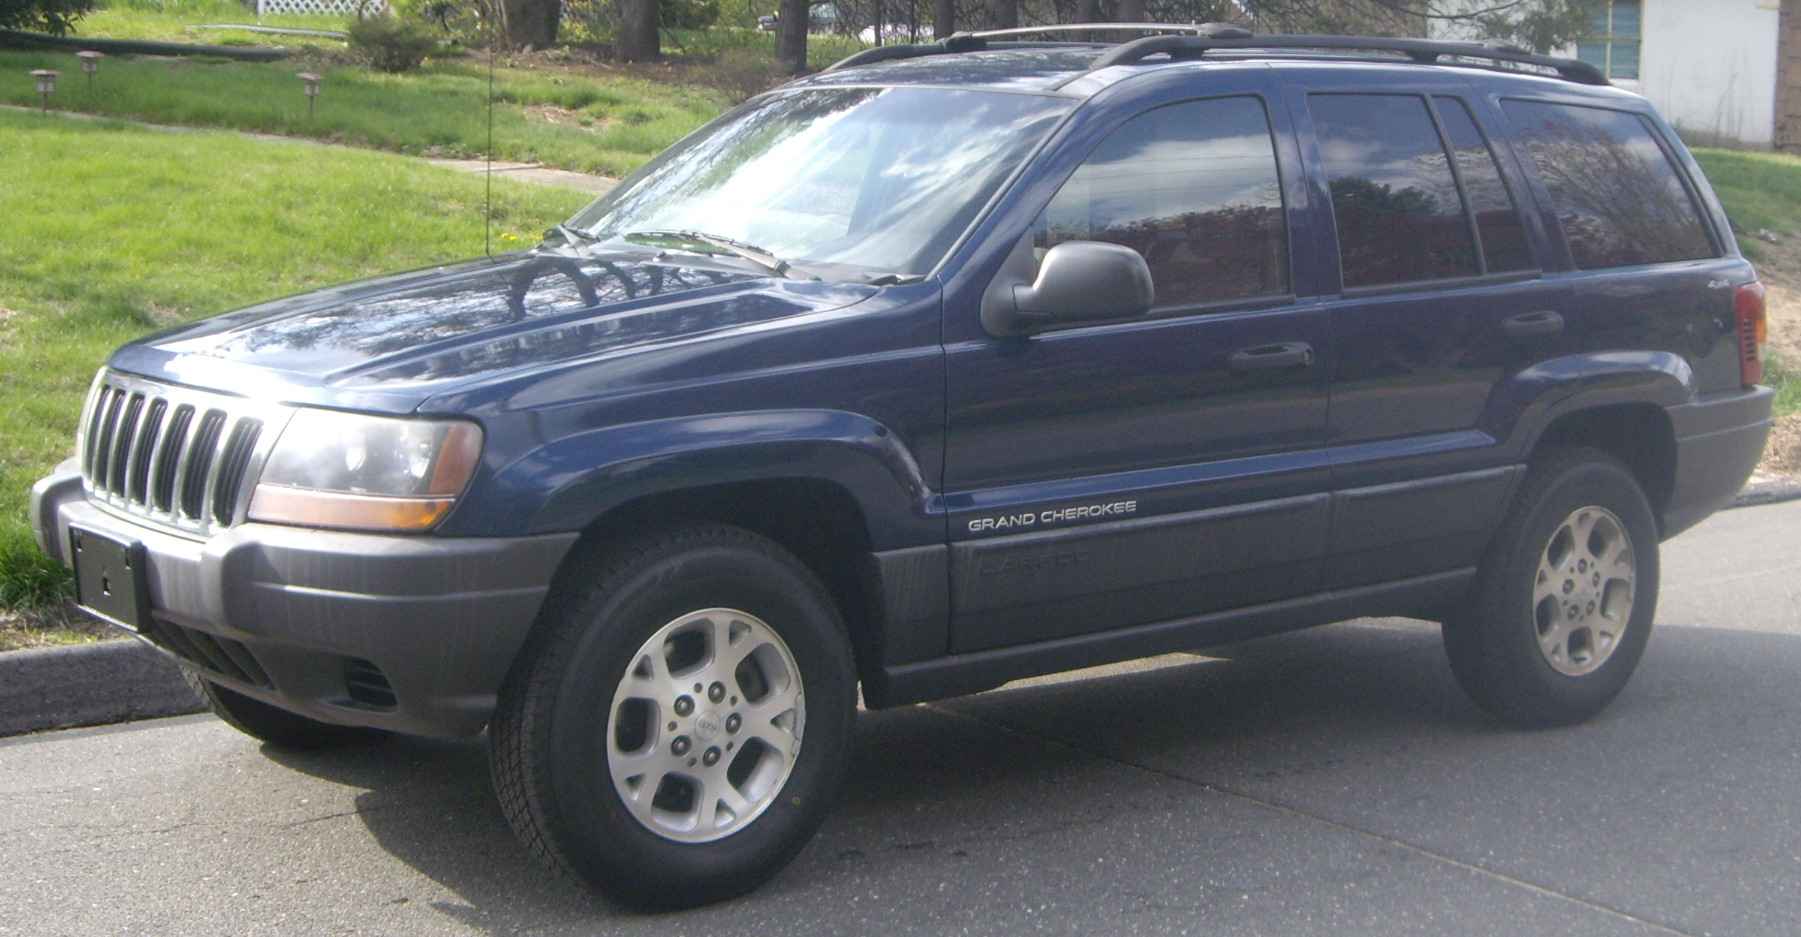 Чероки 2000 года. Jeep Cherokee 2000. Grand Cherokee 2000. Джип Гранд Чероки 2000 года. Jeep Grand Cherokee Laredo 2000.